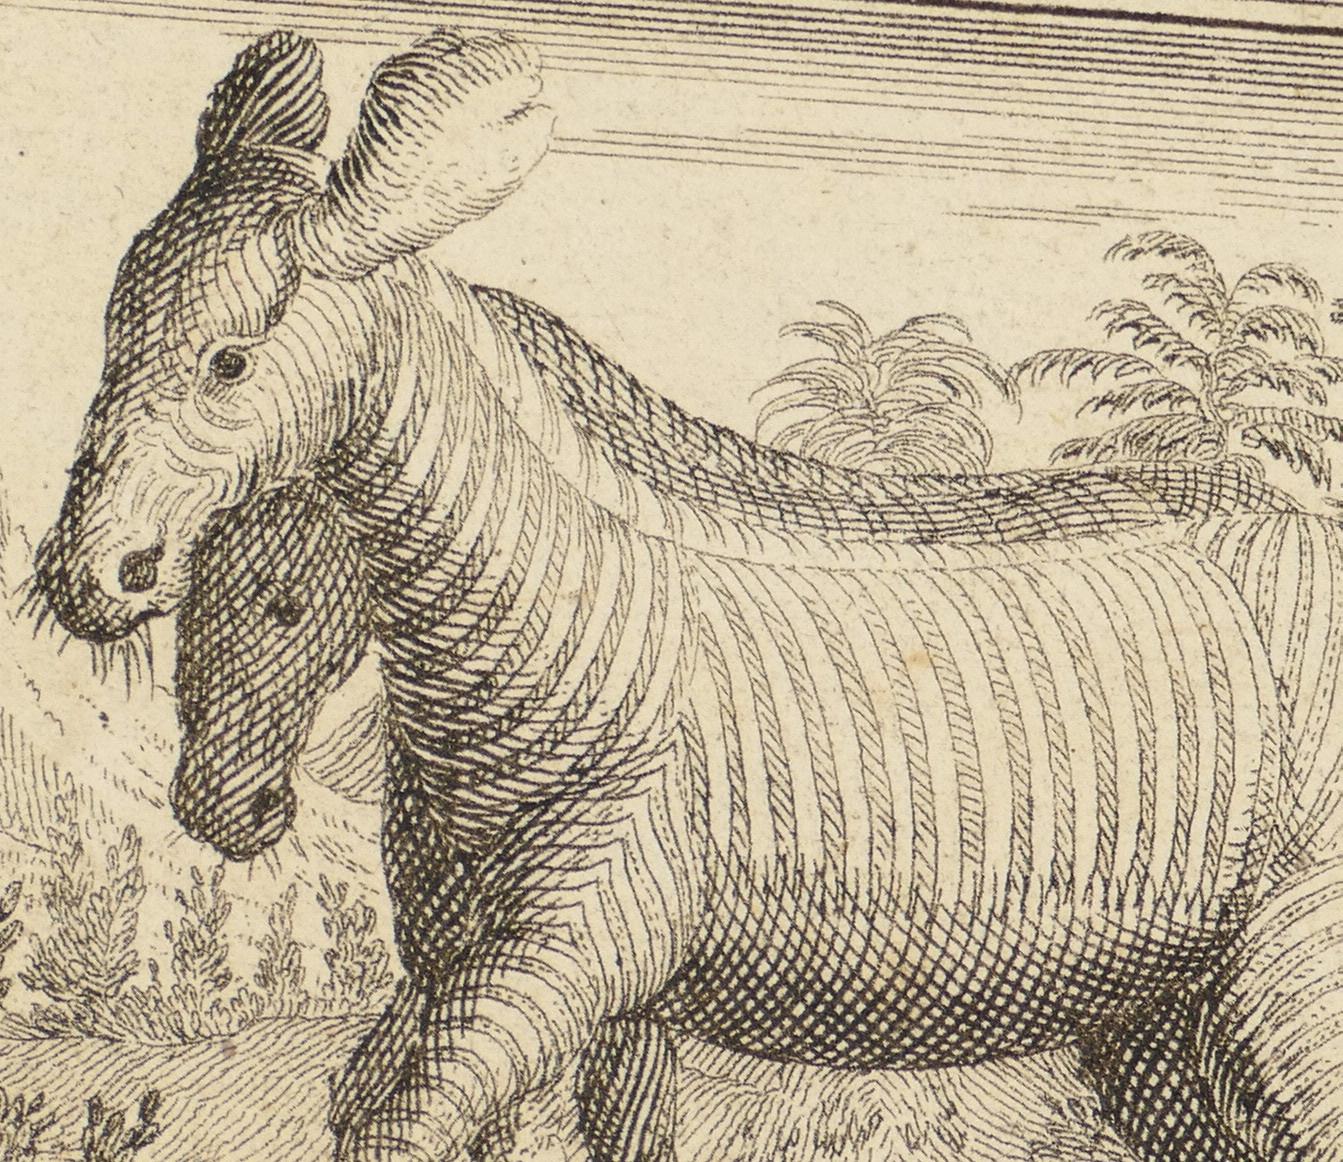 Zebras - Original Etching - 18th Century - Print by Unknown